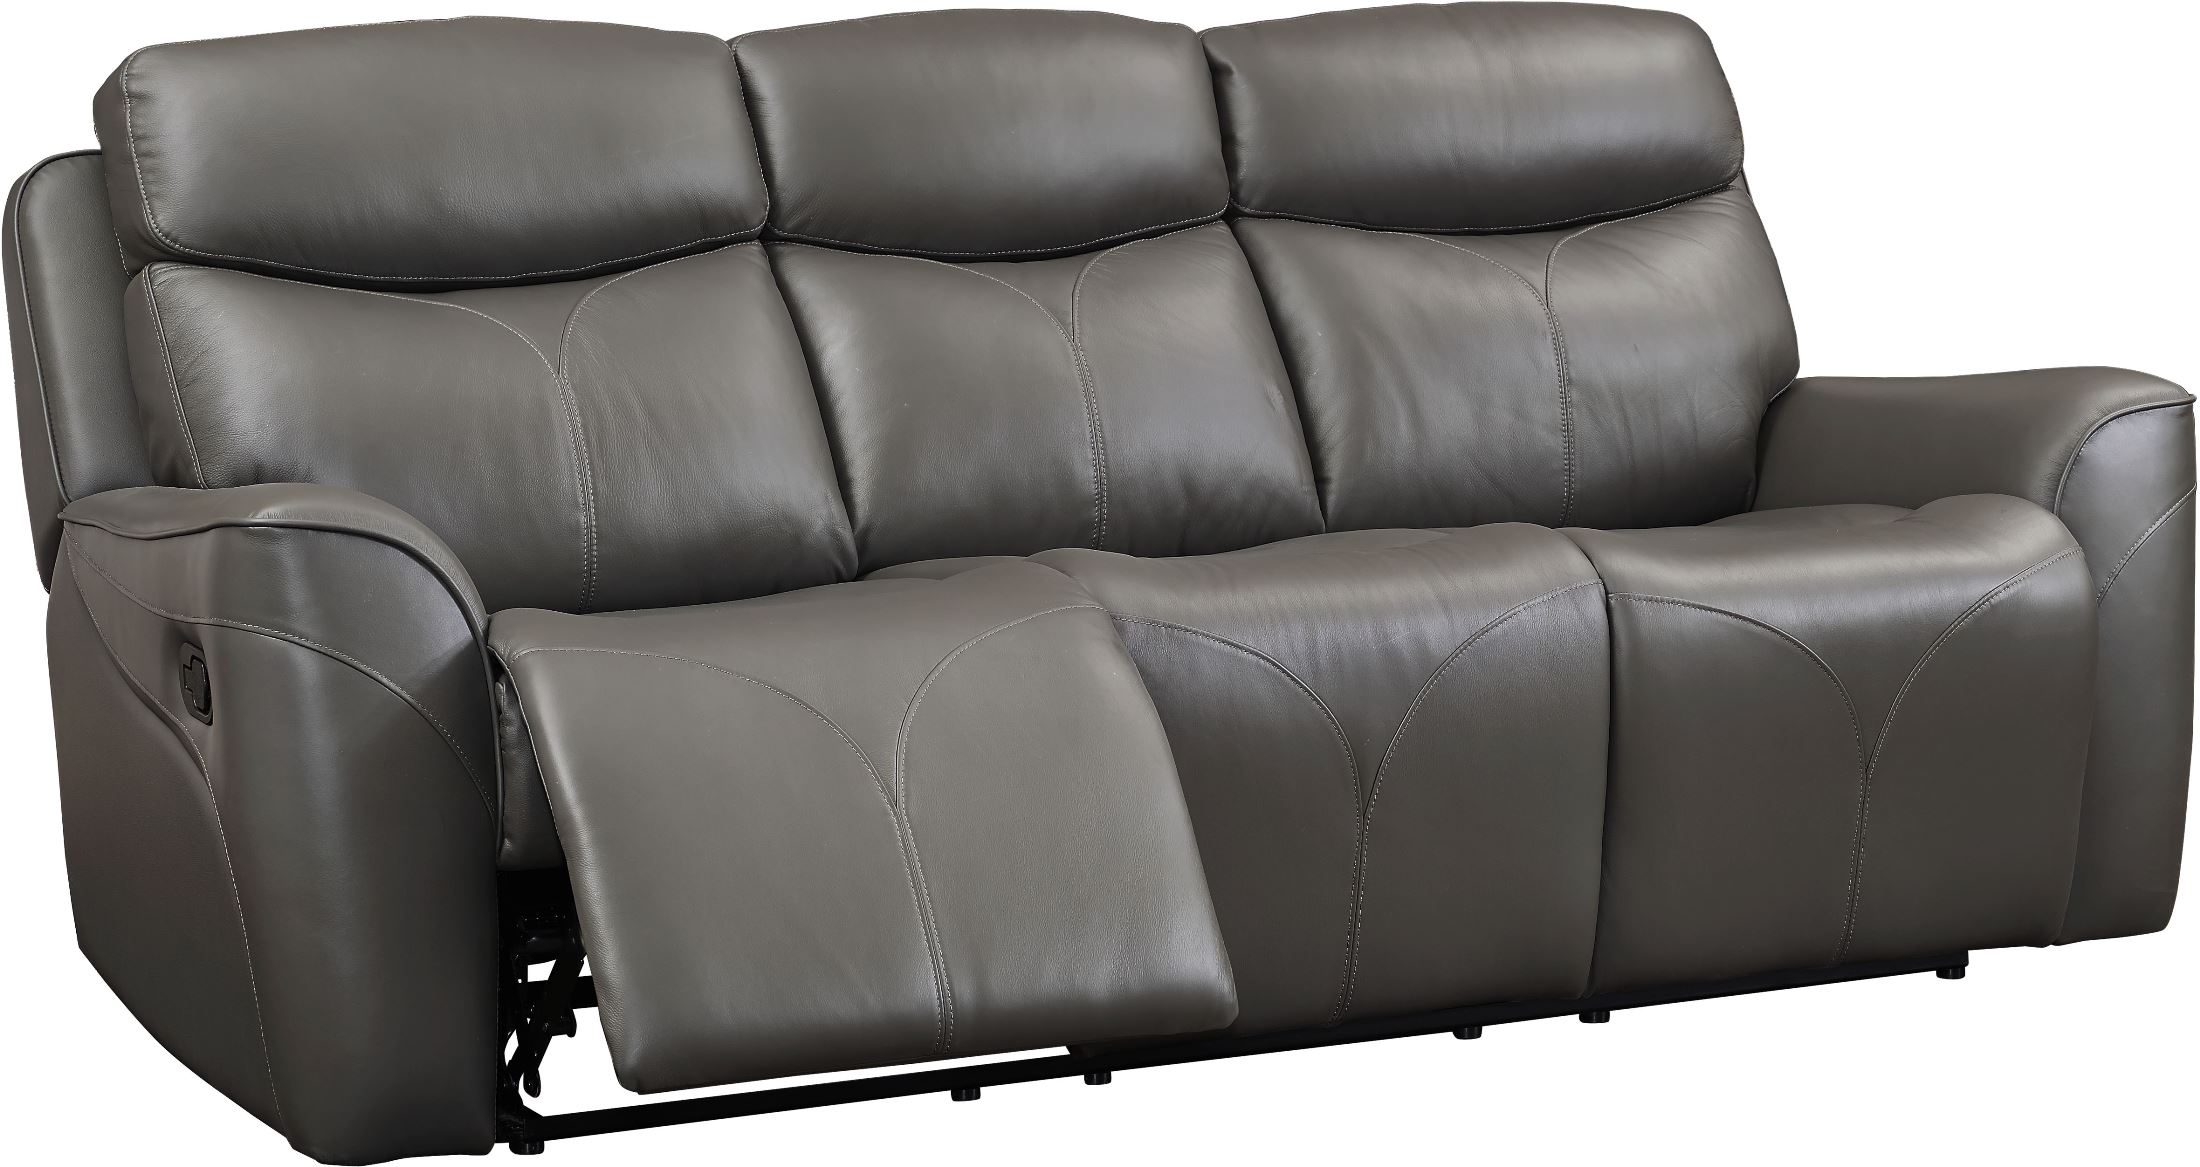 mark harrison dual reclining leather sofa